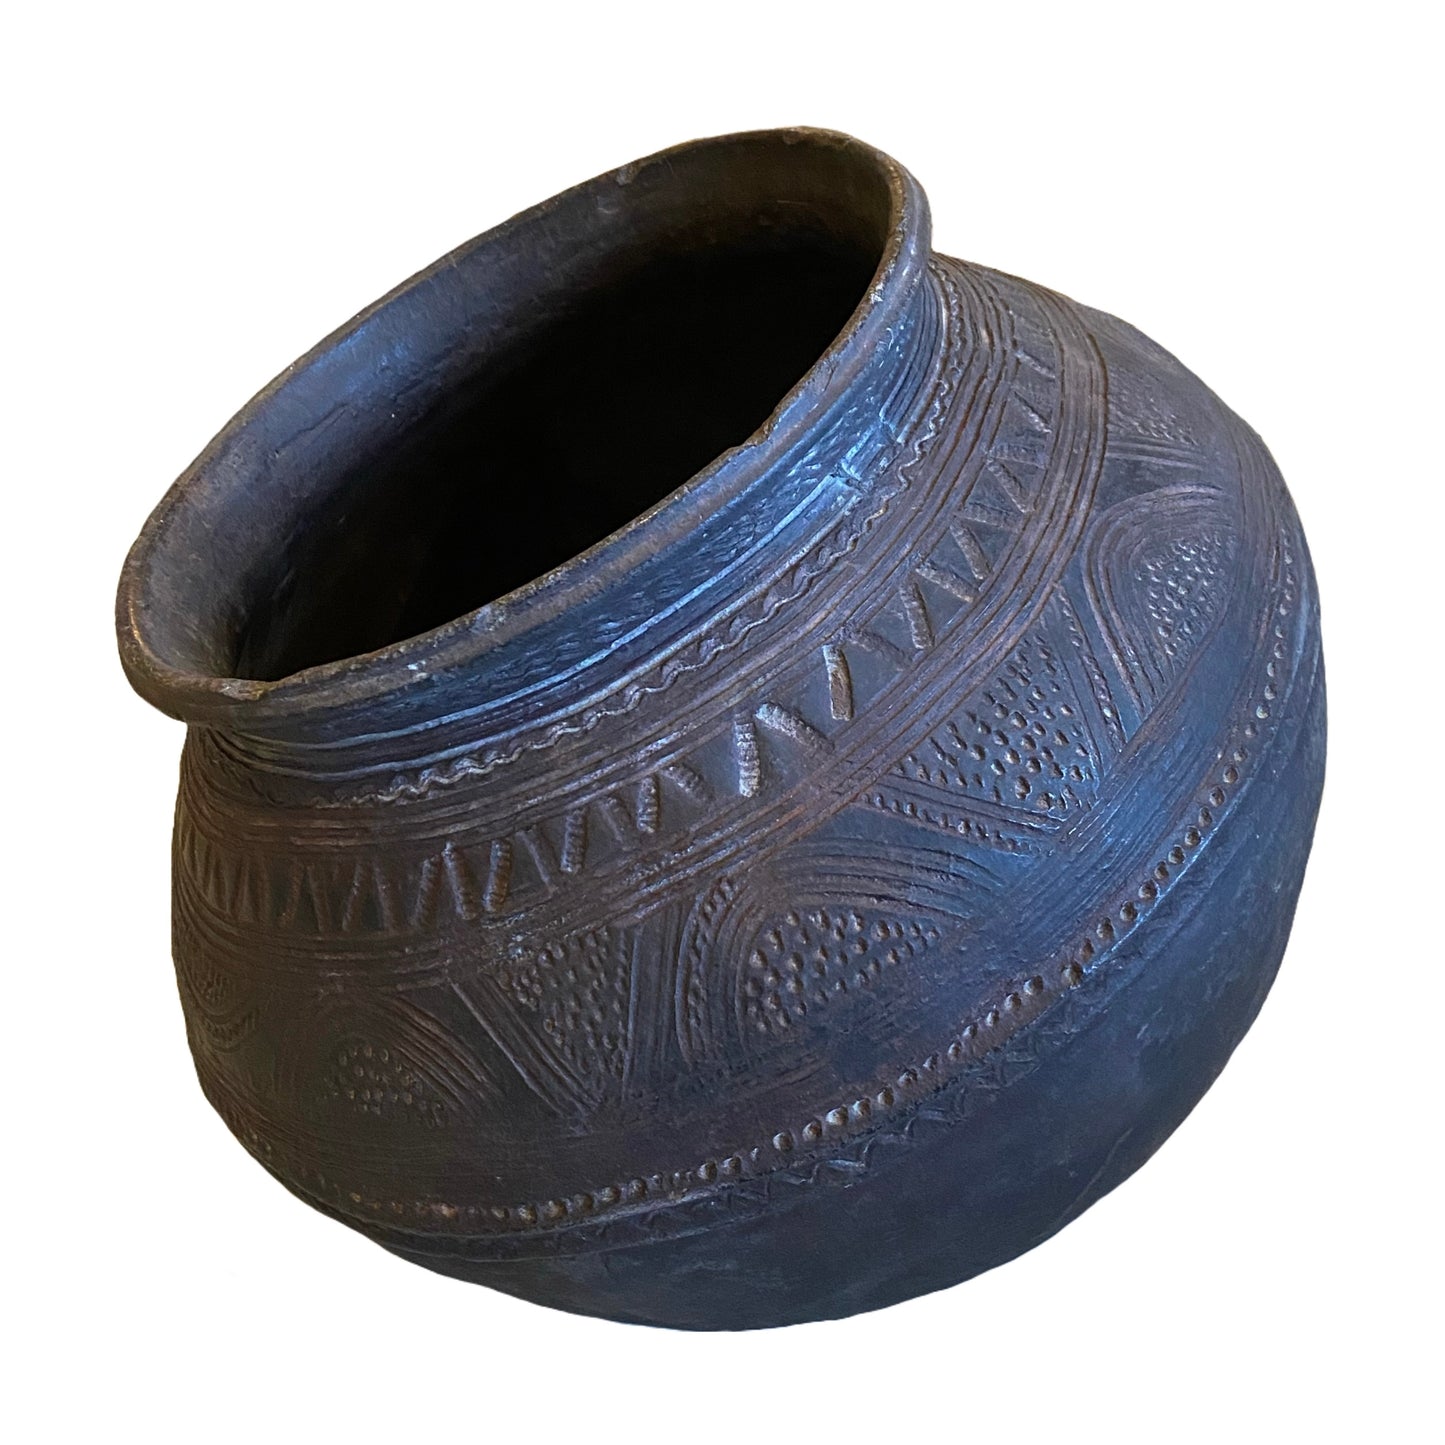 Nigerian Clay Pot / Planter